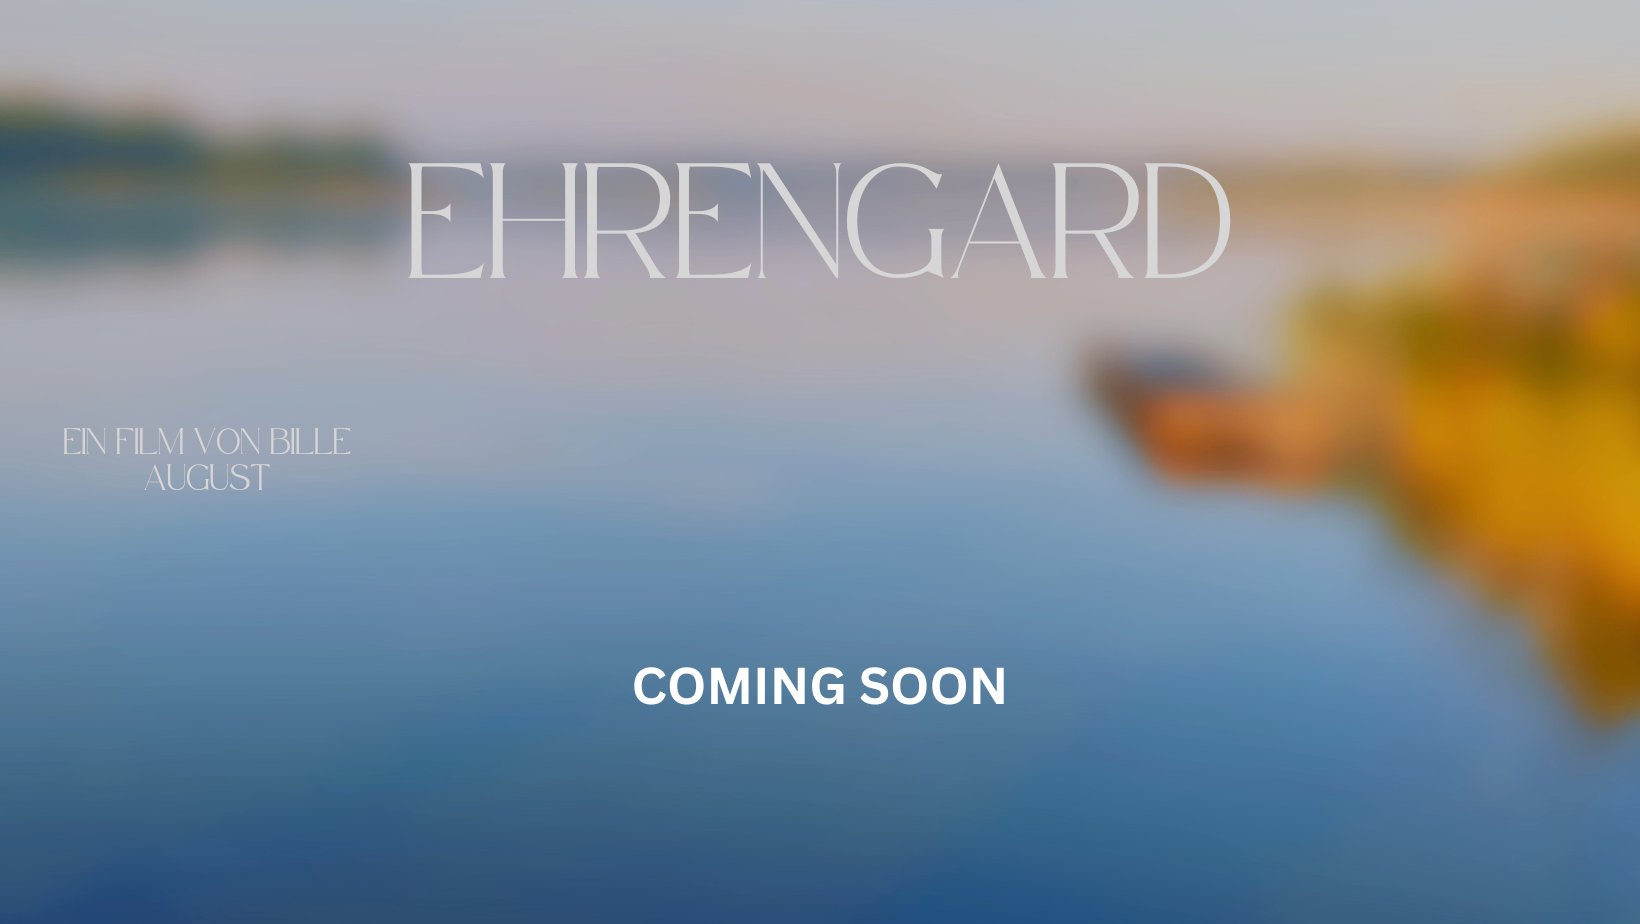 Bille August films the novel “Ehrengard” by Tania Blixen for Netflix Thumbnail